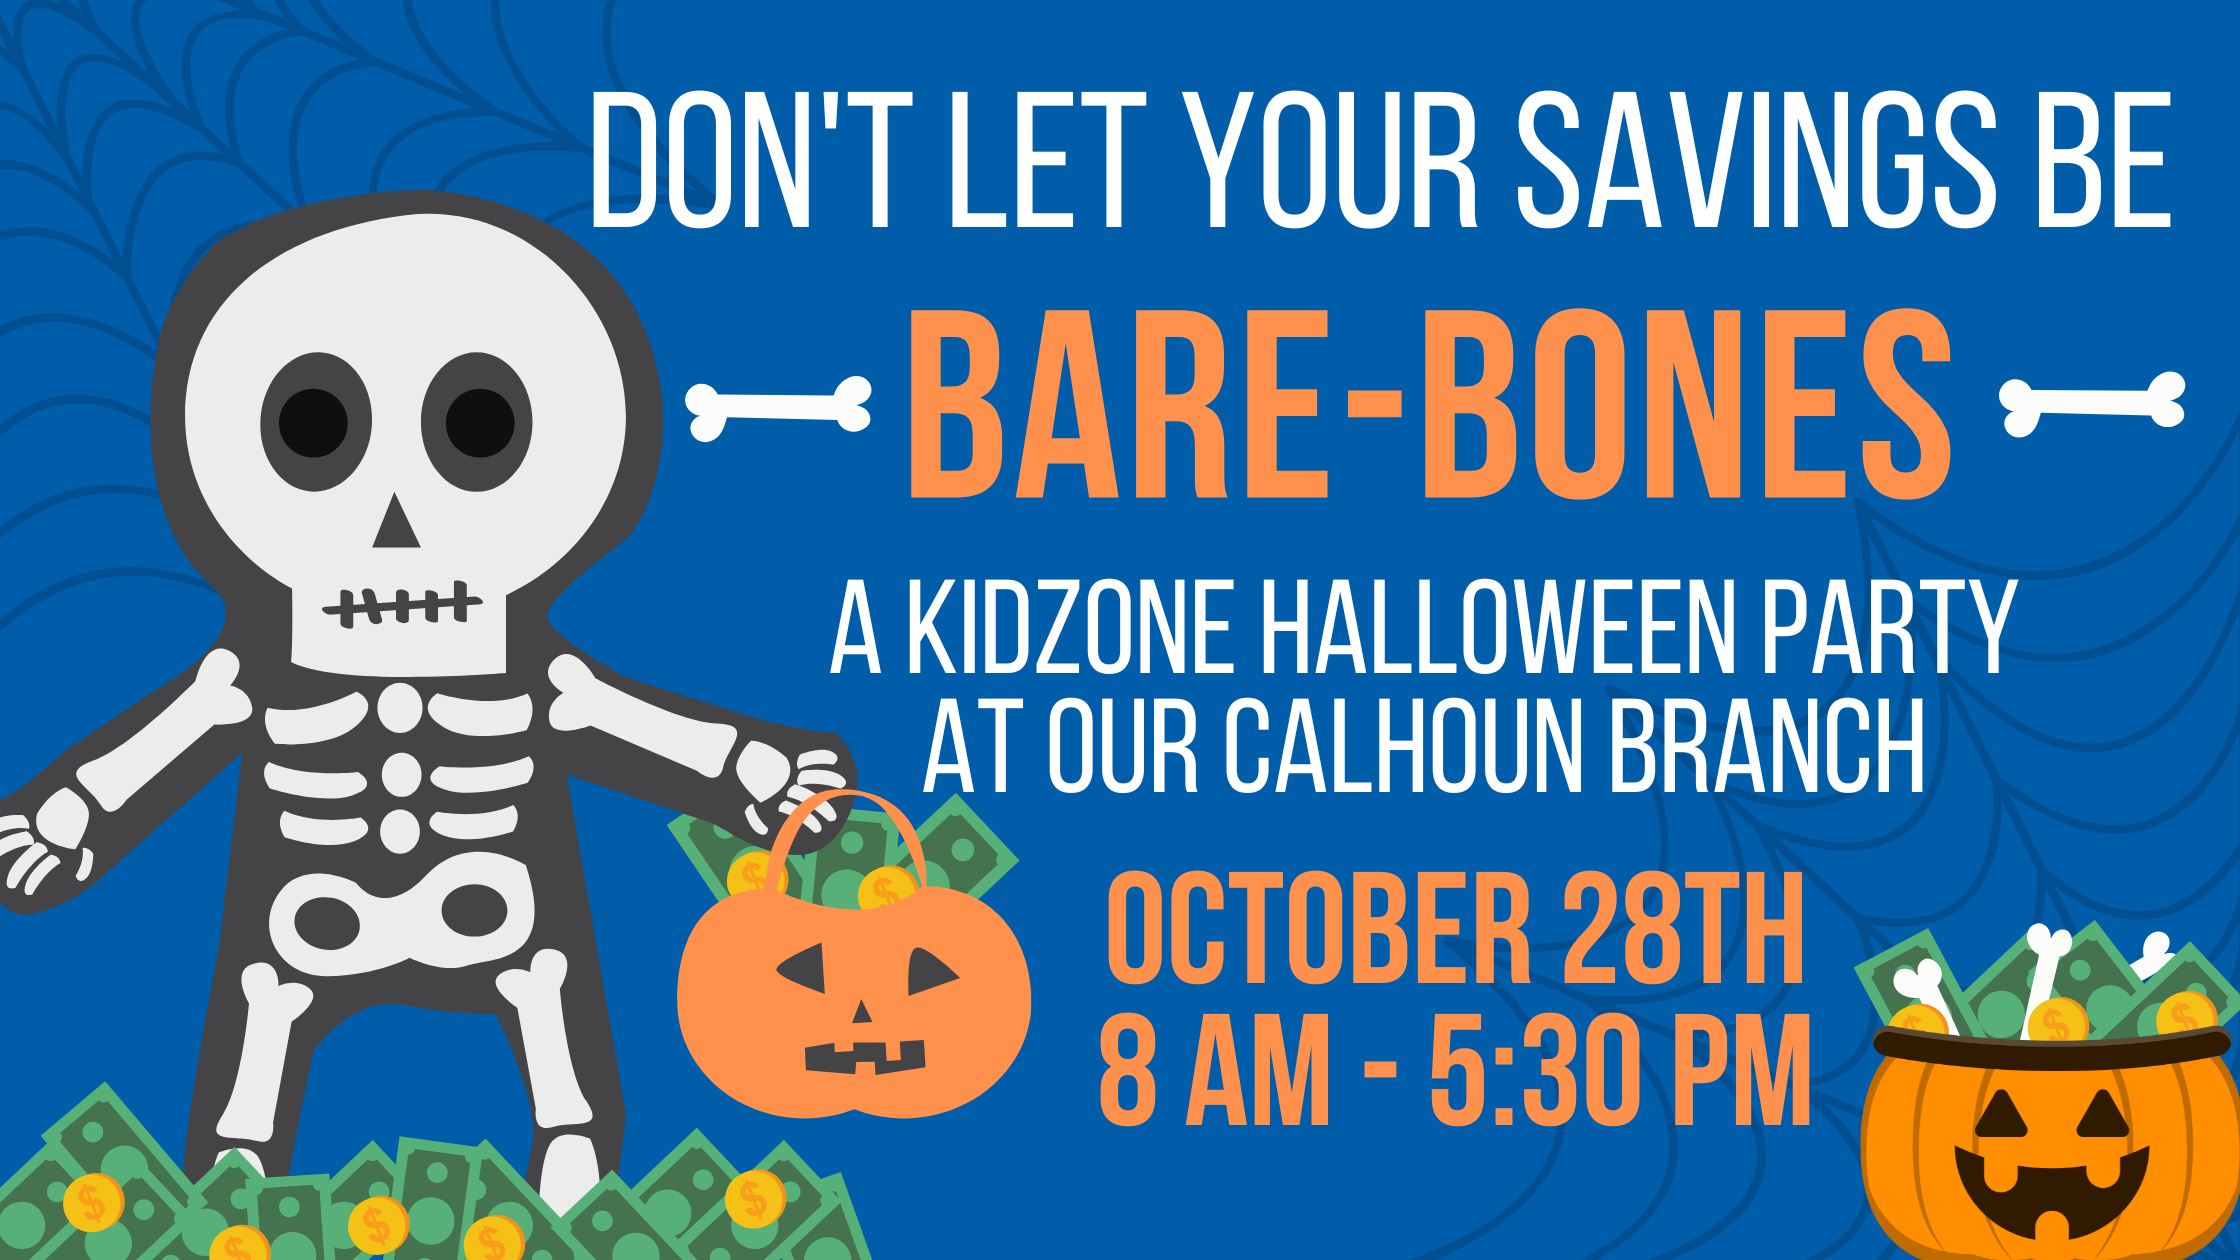 invite to KidZone Halloween Party